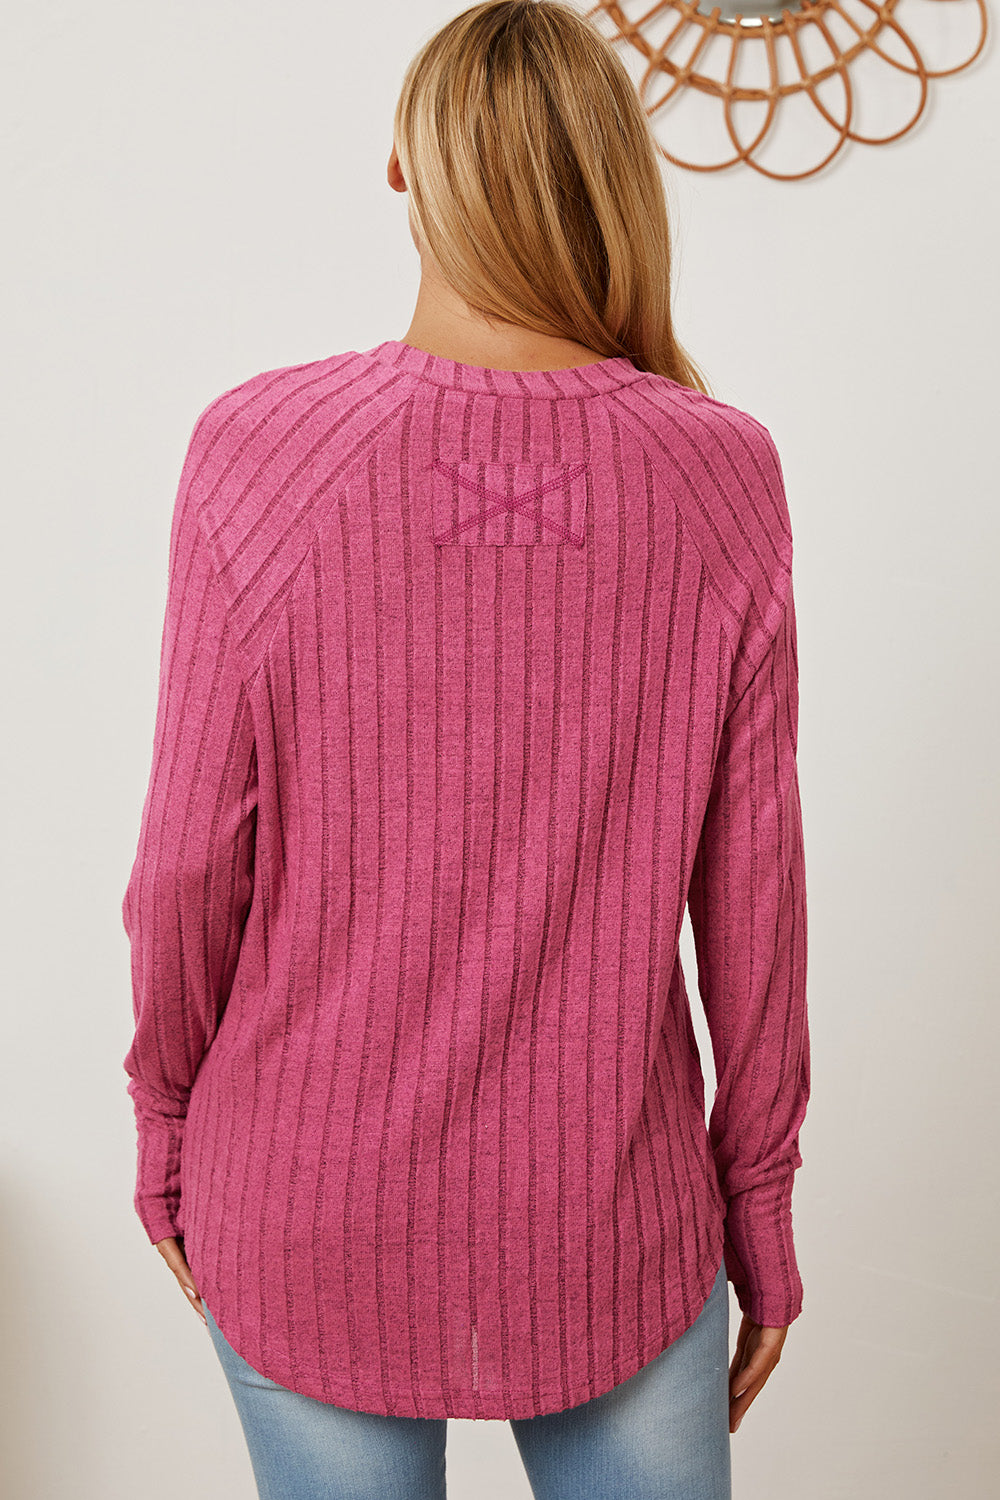 Light Pink Color Ribbed Thumbhole Sleeve T-Shirt